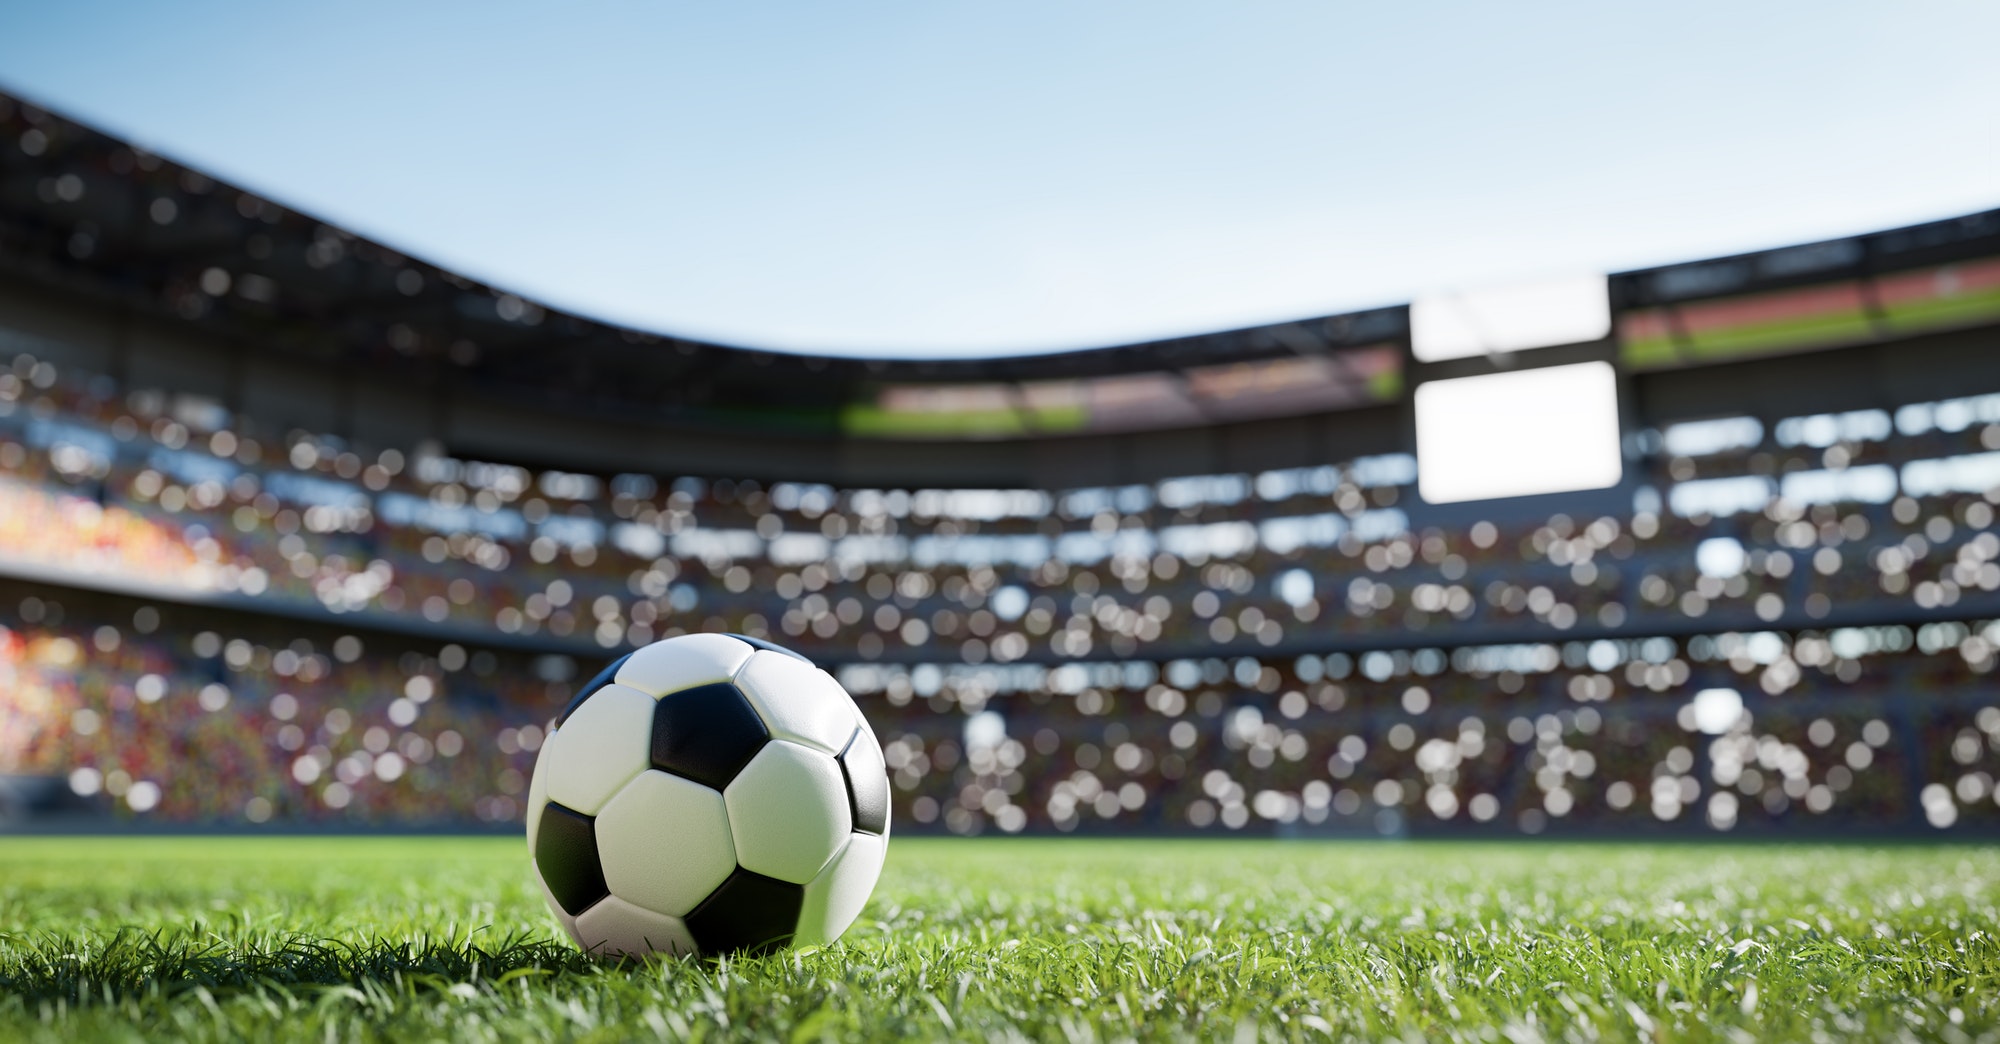 Football soccer ball on grass field on stadium